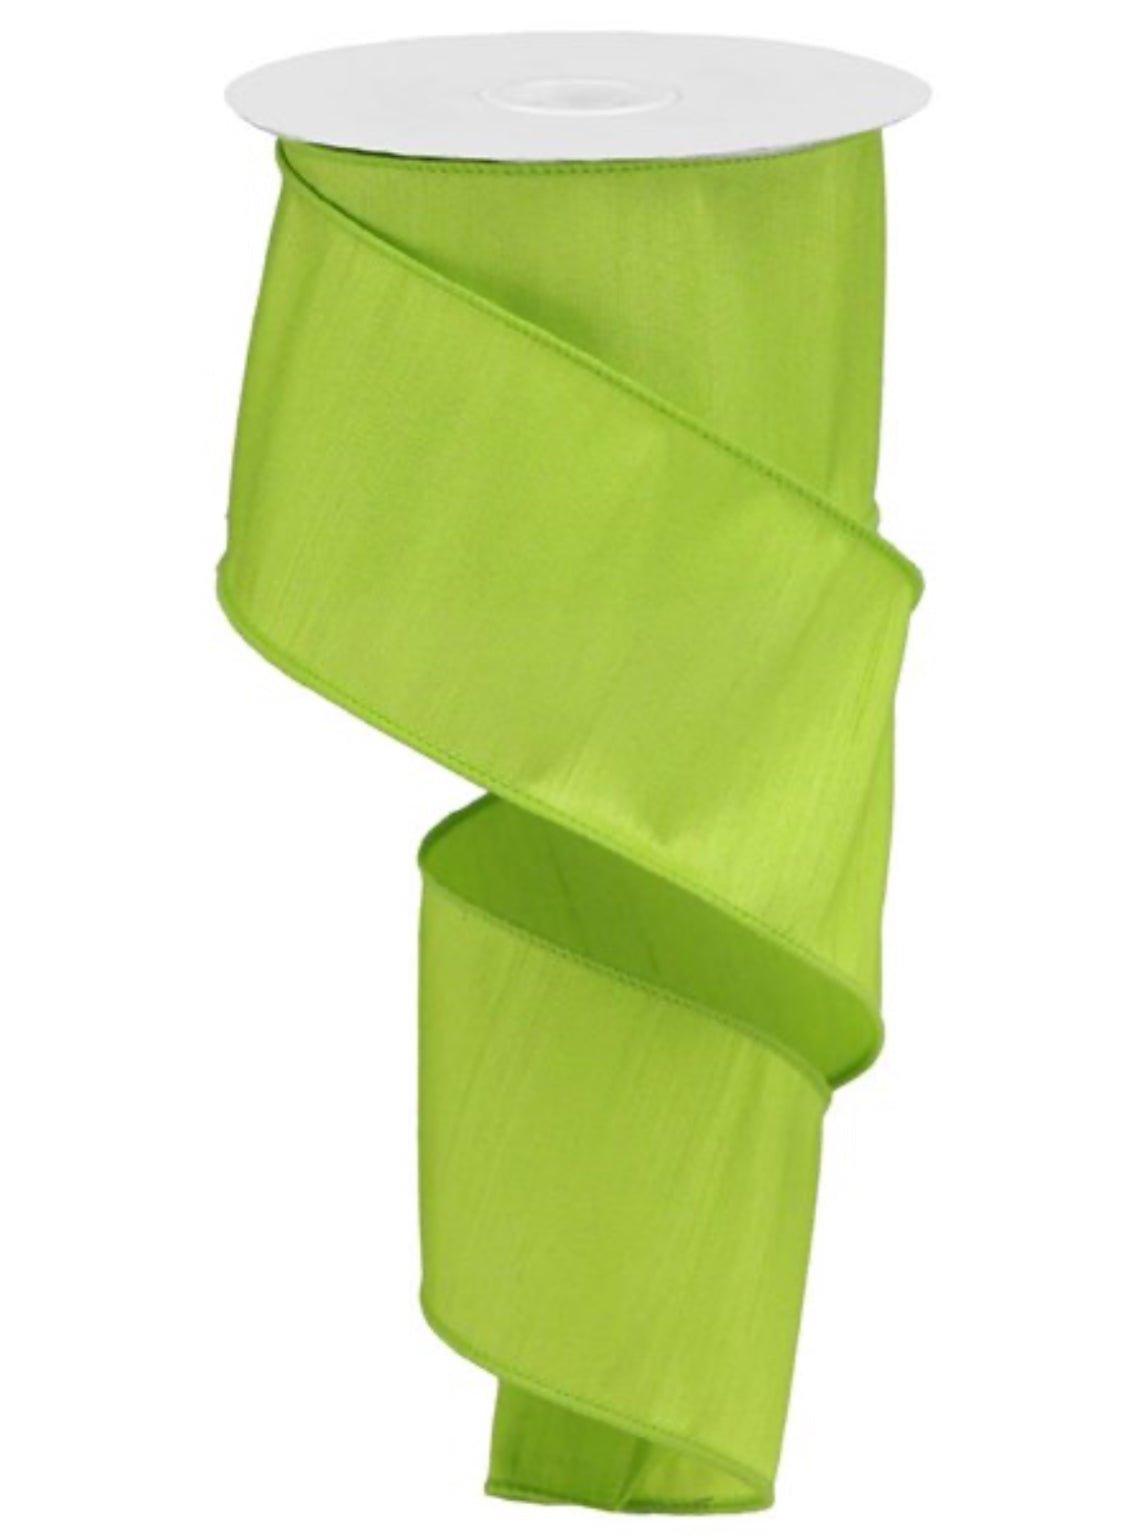 Spring green faux dupioni Solid 2.5” - Greenery MarketWired ribbonRD1102A4